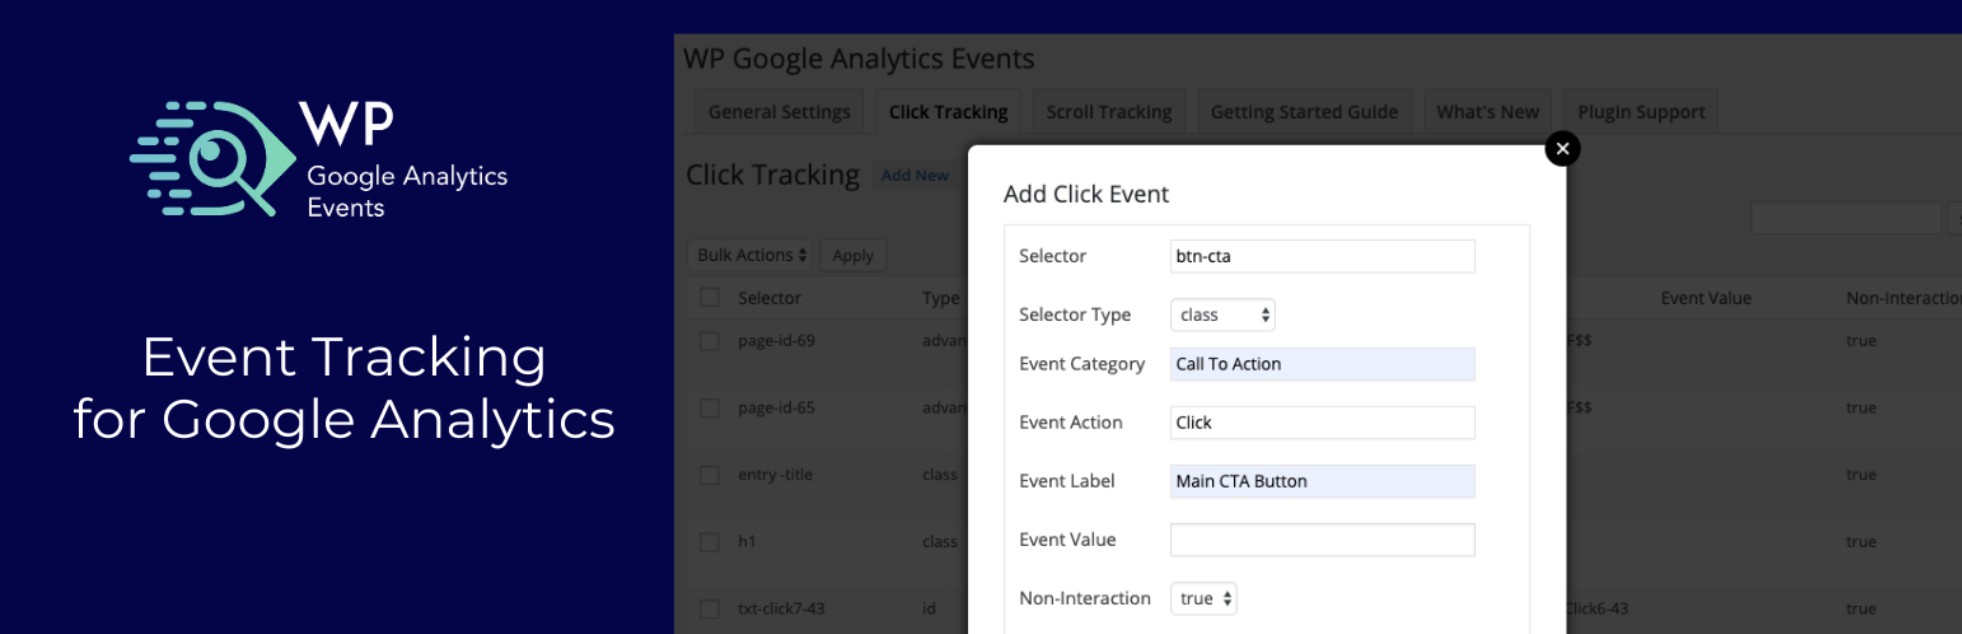 WP Google Analytics Events plugin